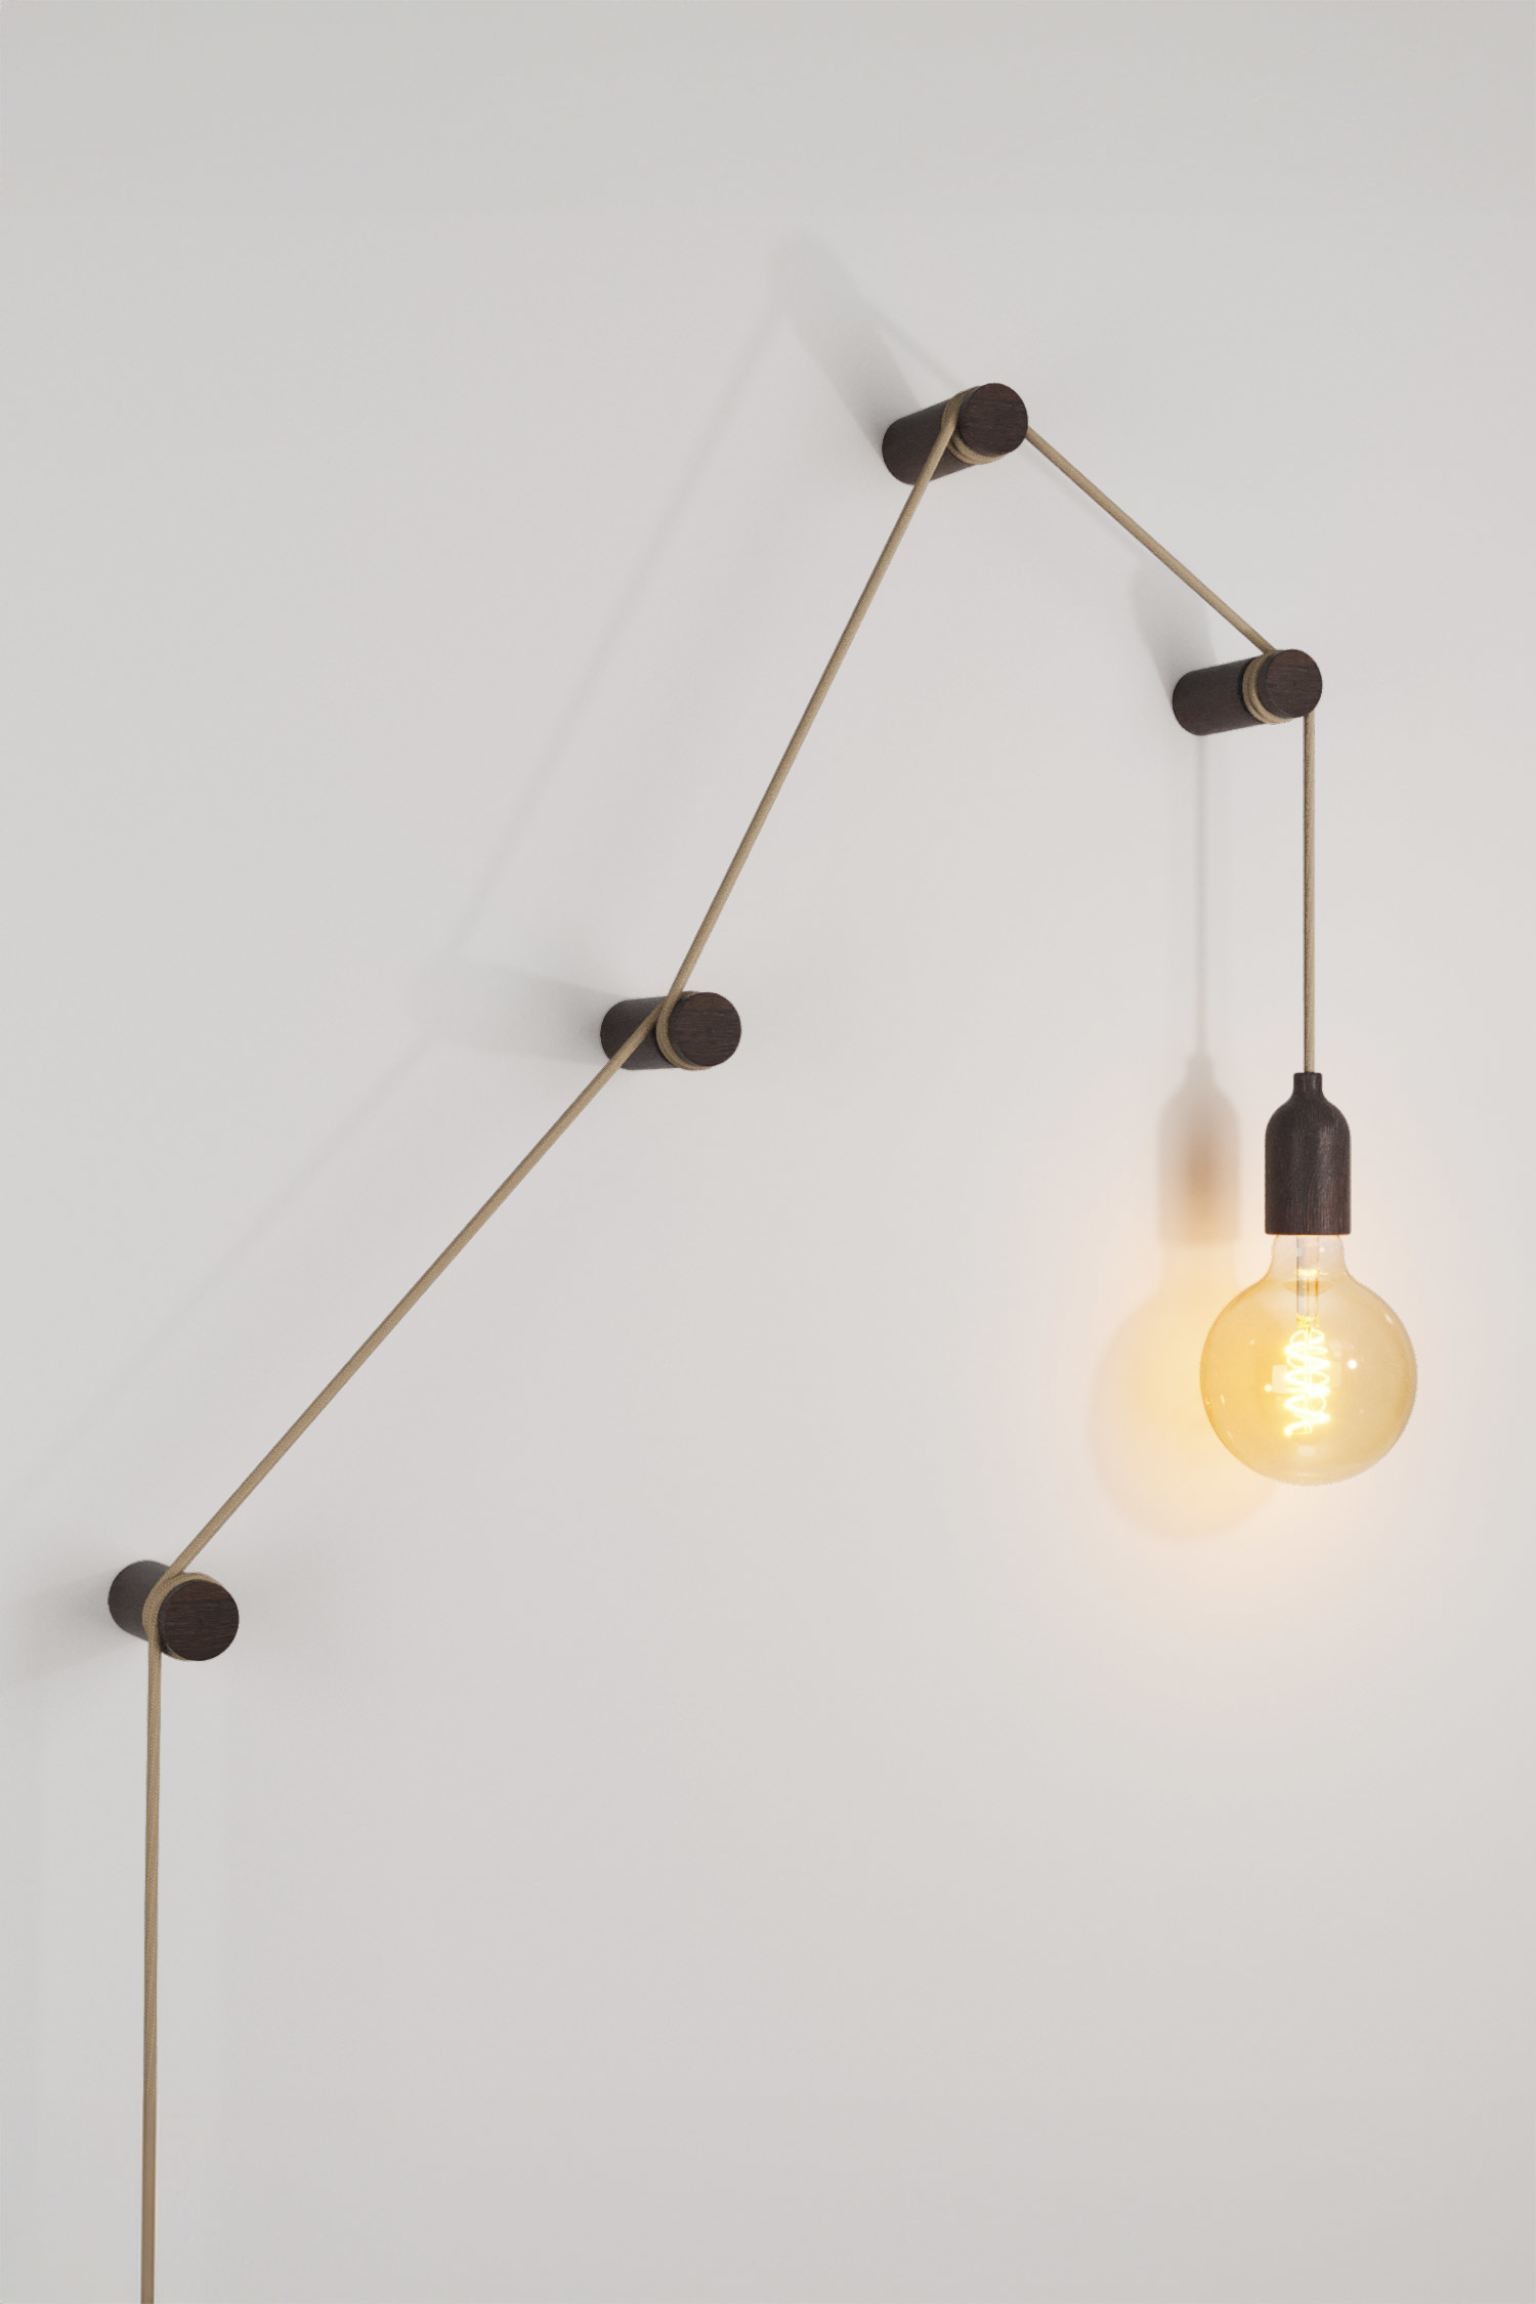 Creative-Cables Модульна вставна дерев'яна лампа з лампочкою - чорна 1232985001 | 1232985001